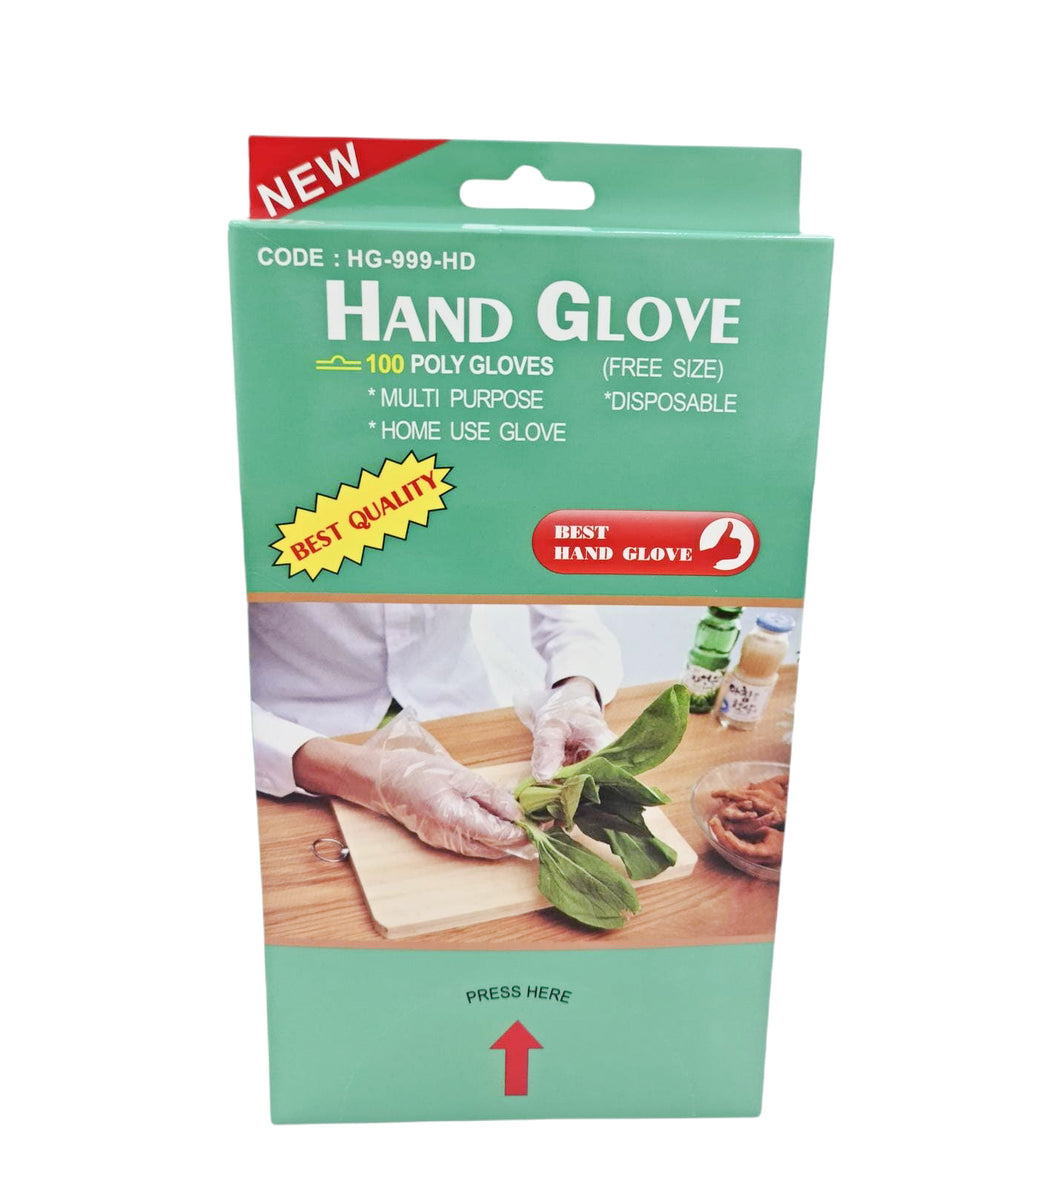 HD PLASTIC HAND GLOVE